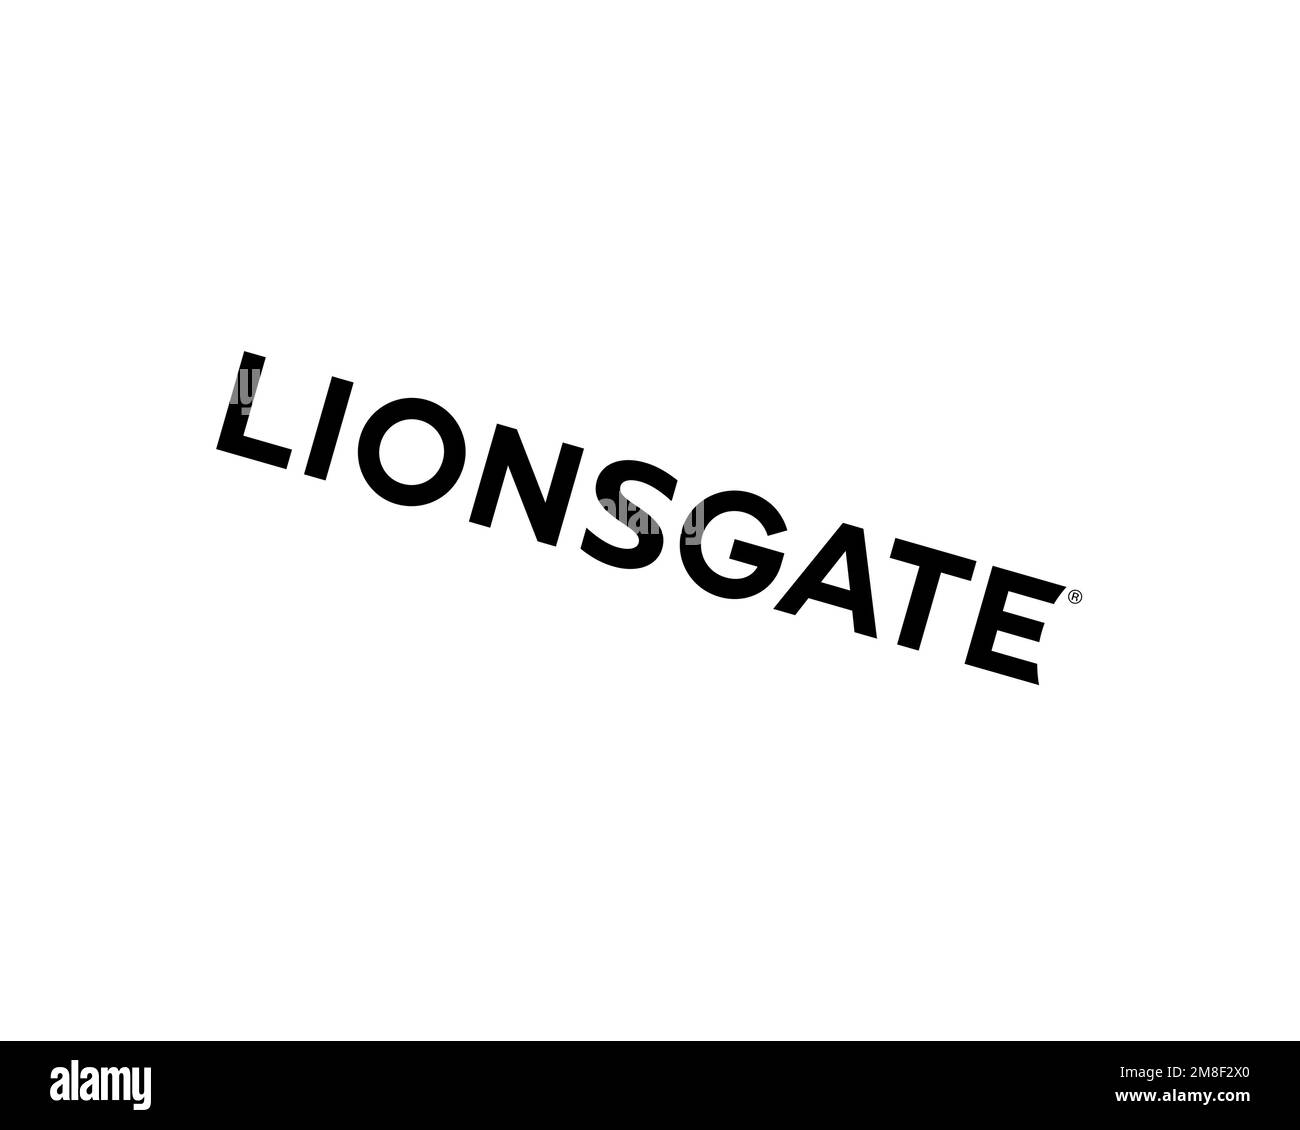 lionsgate logo 2022